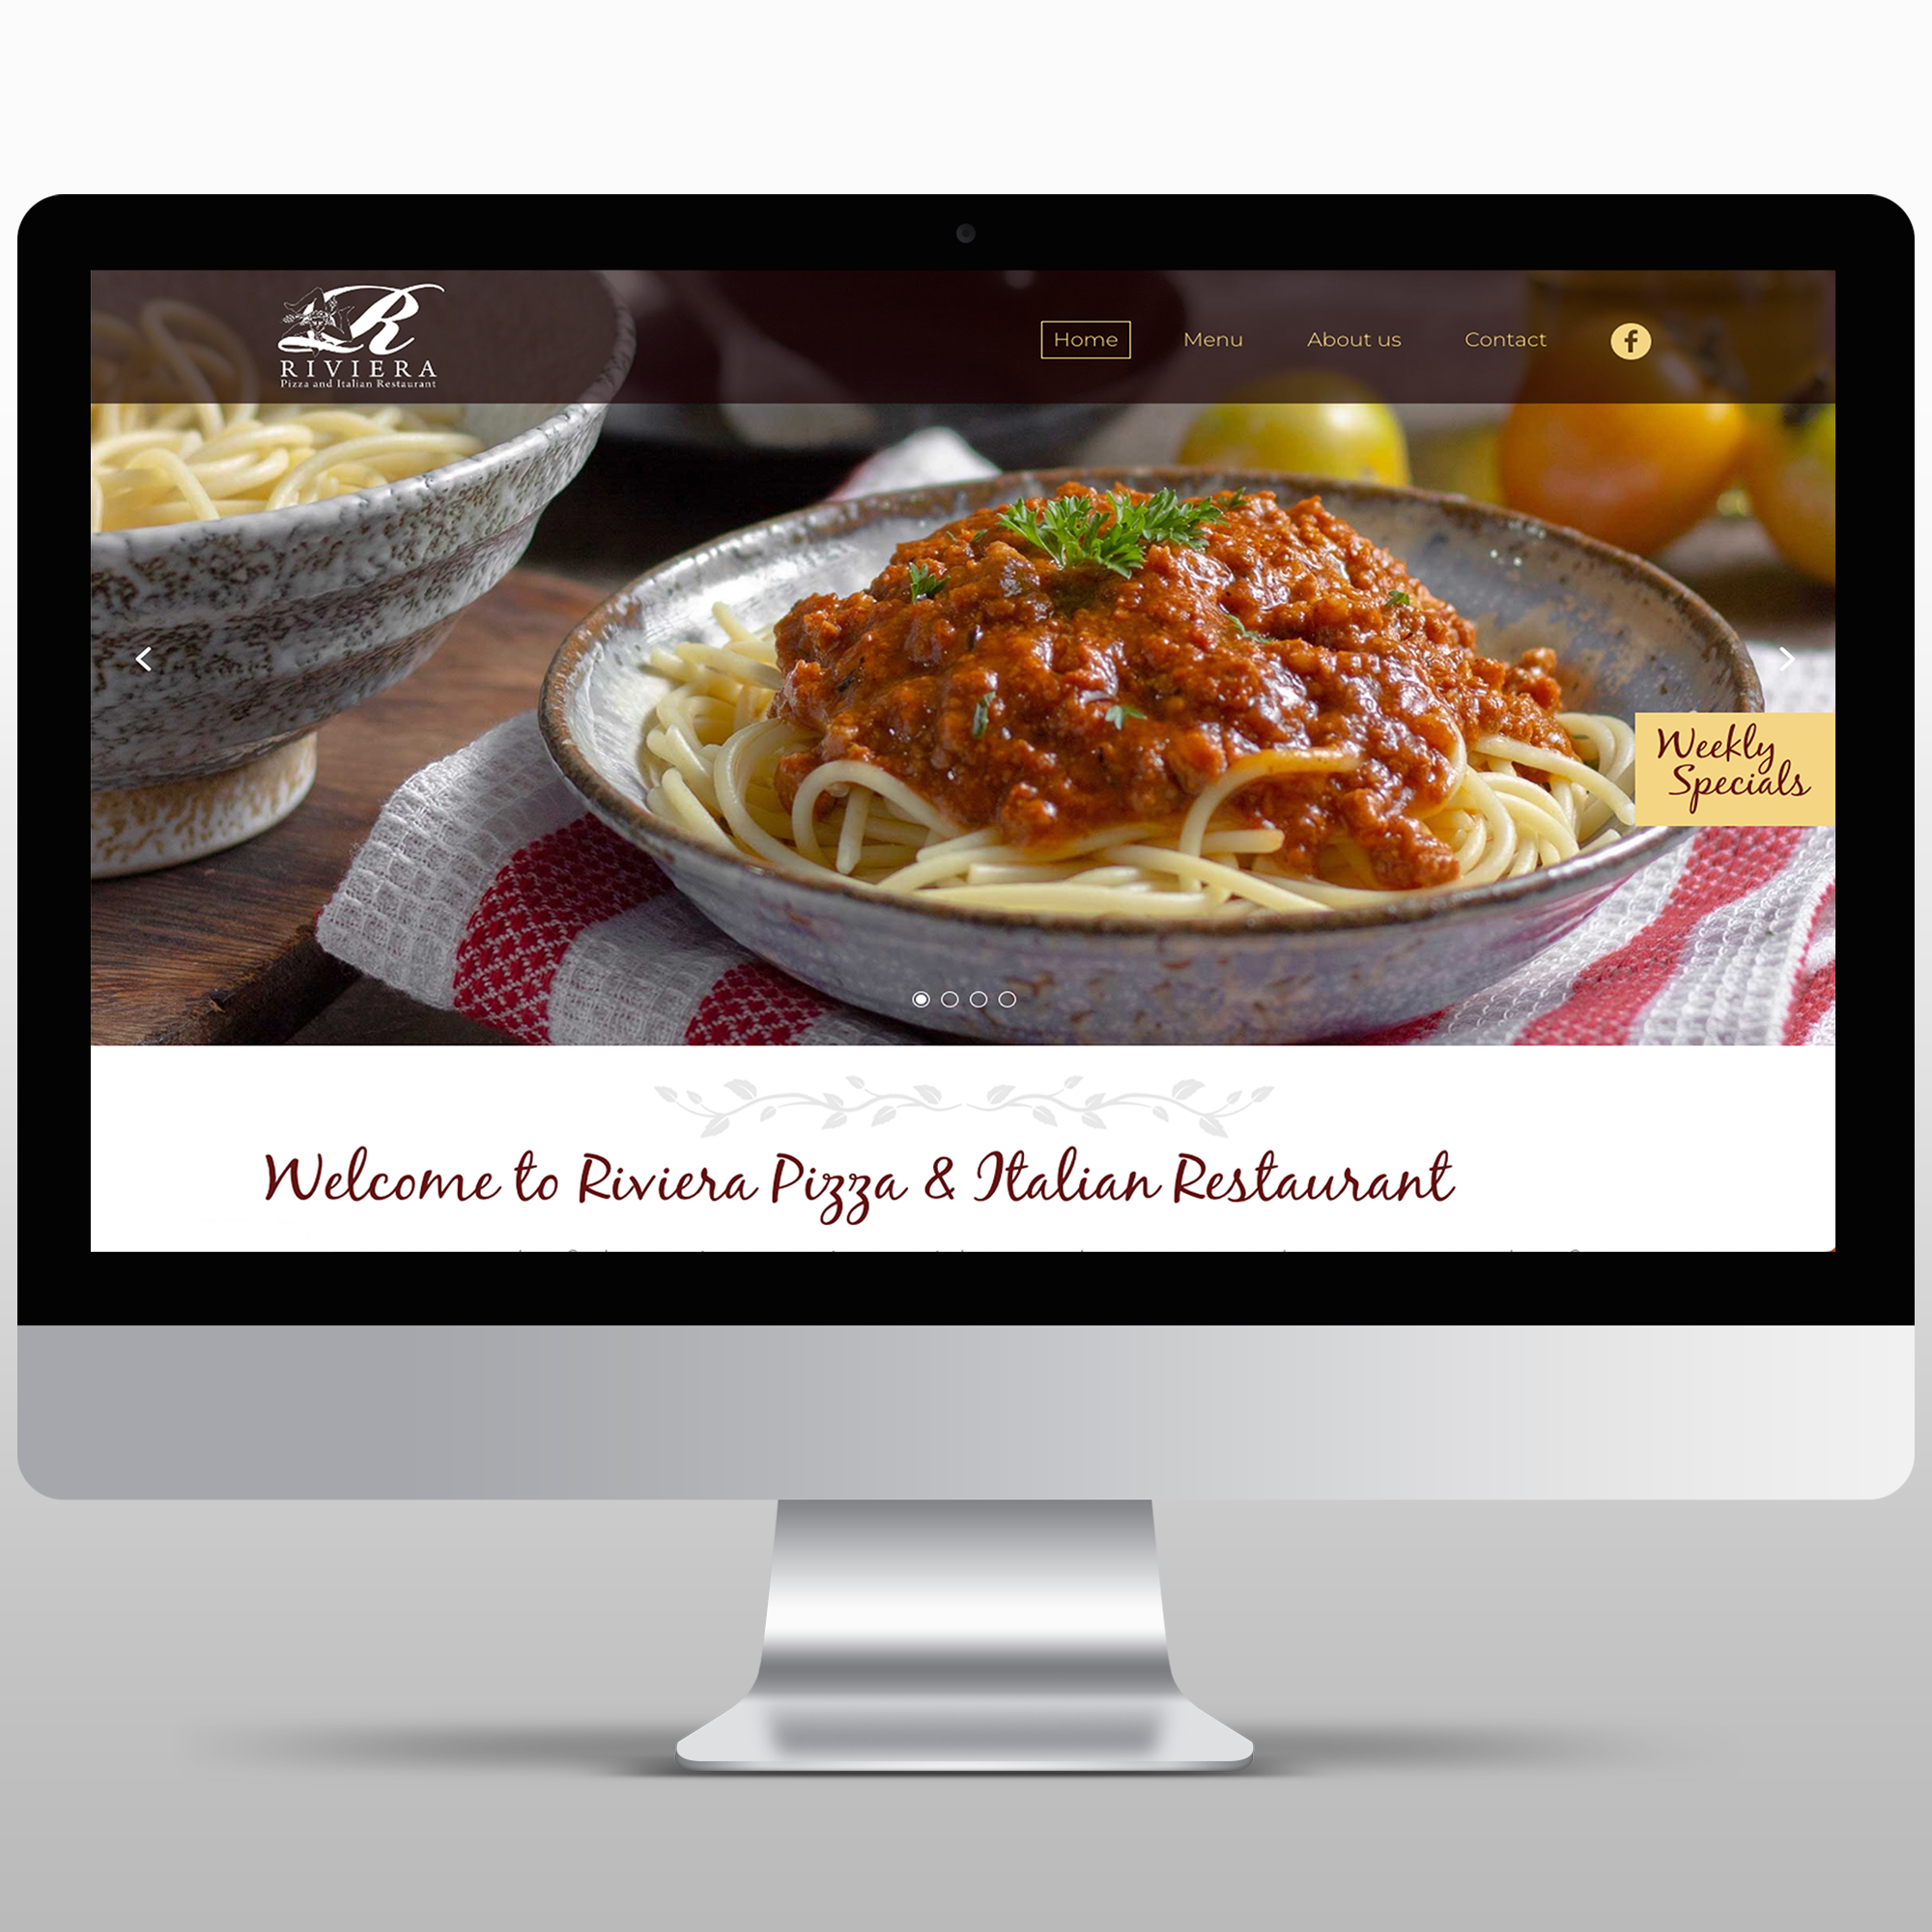 Website Upgrade For Italian Restaurant